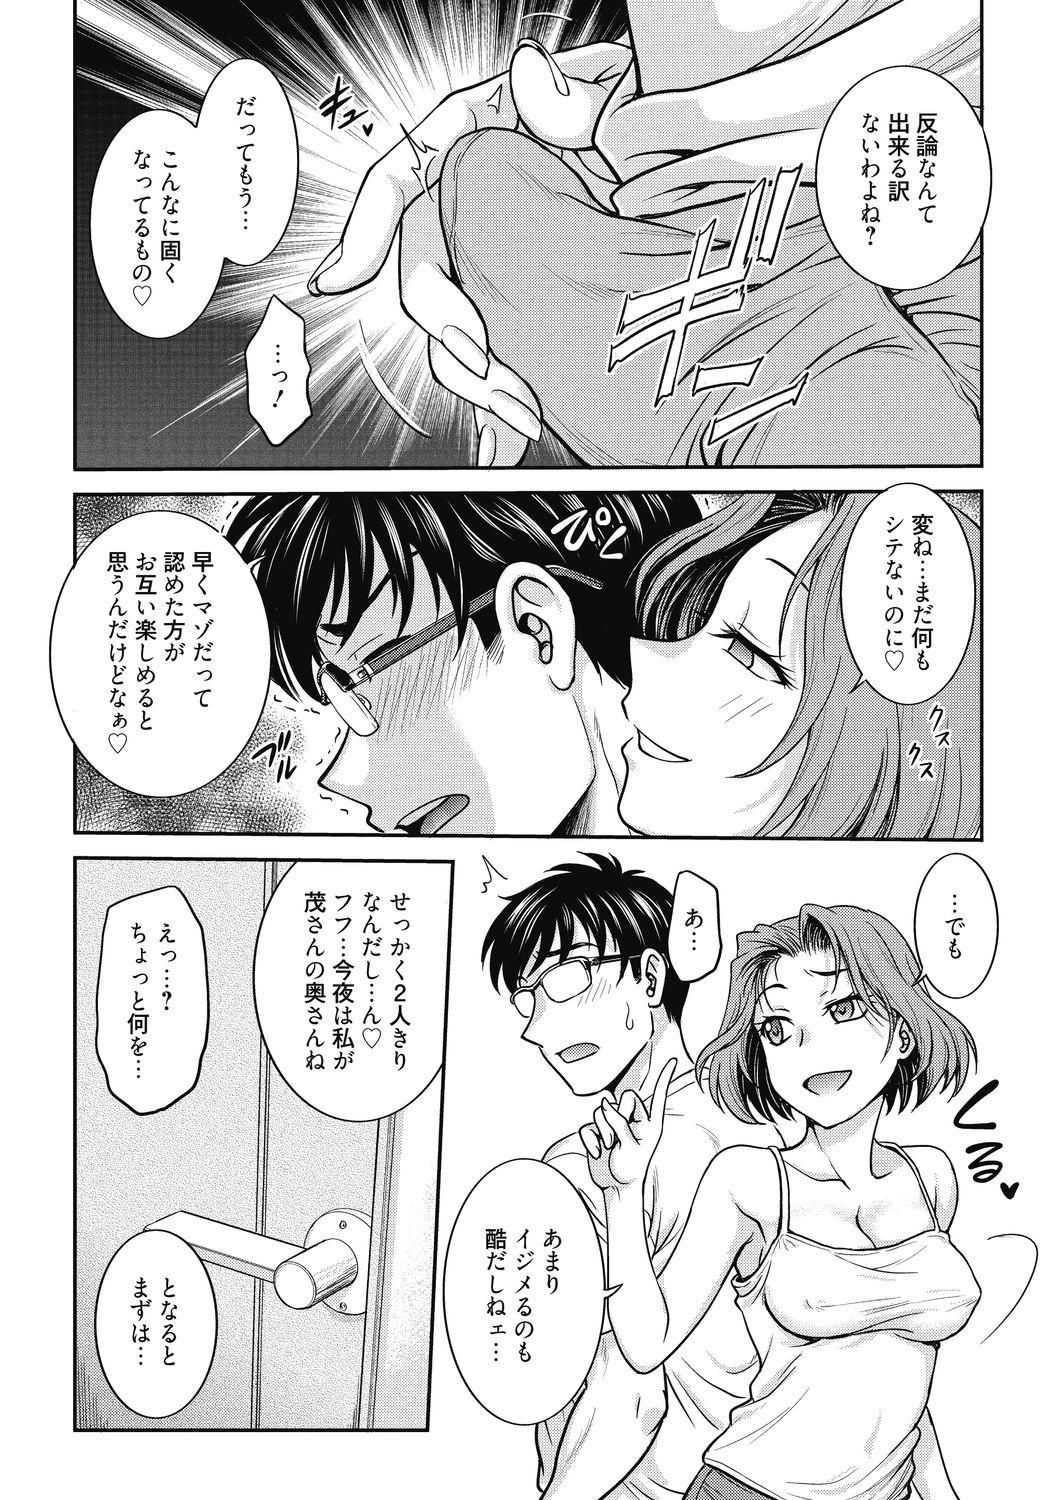 Kanojo no Shitagi o Nusundara... - I tried to steal her underwear... 113